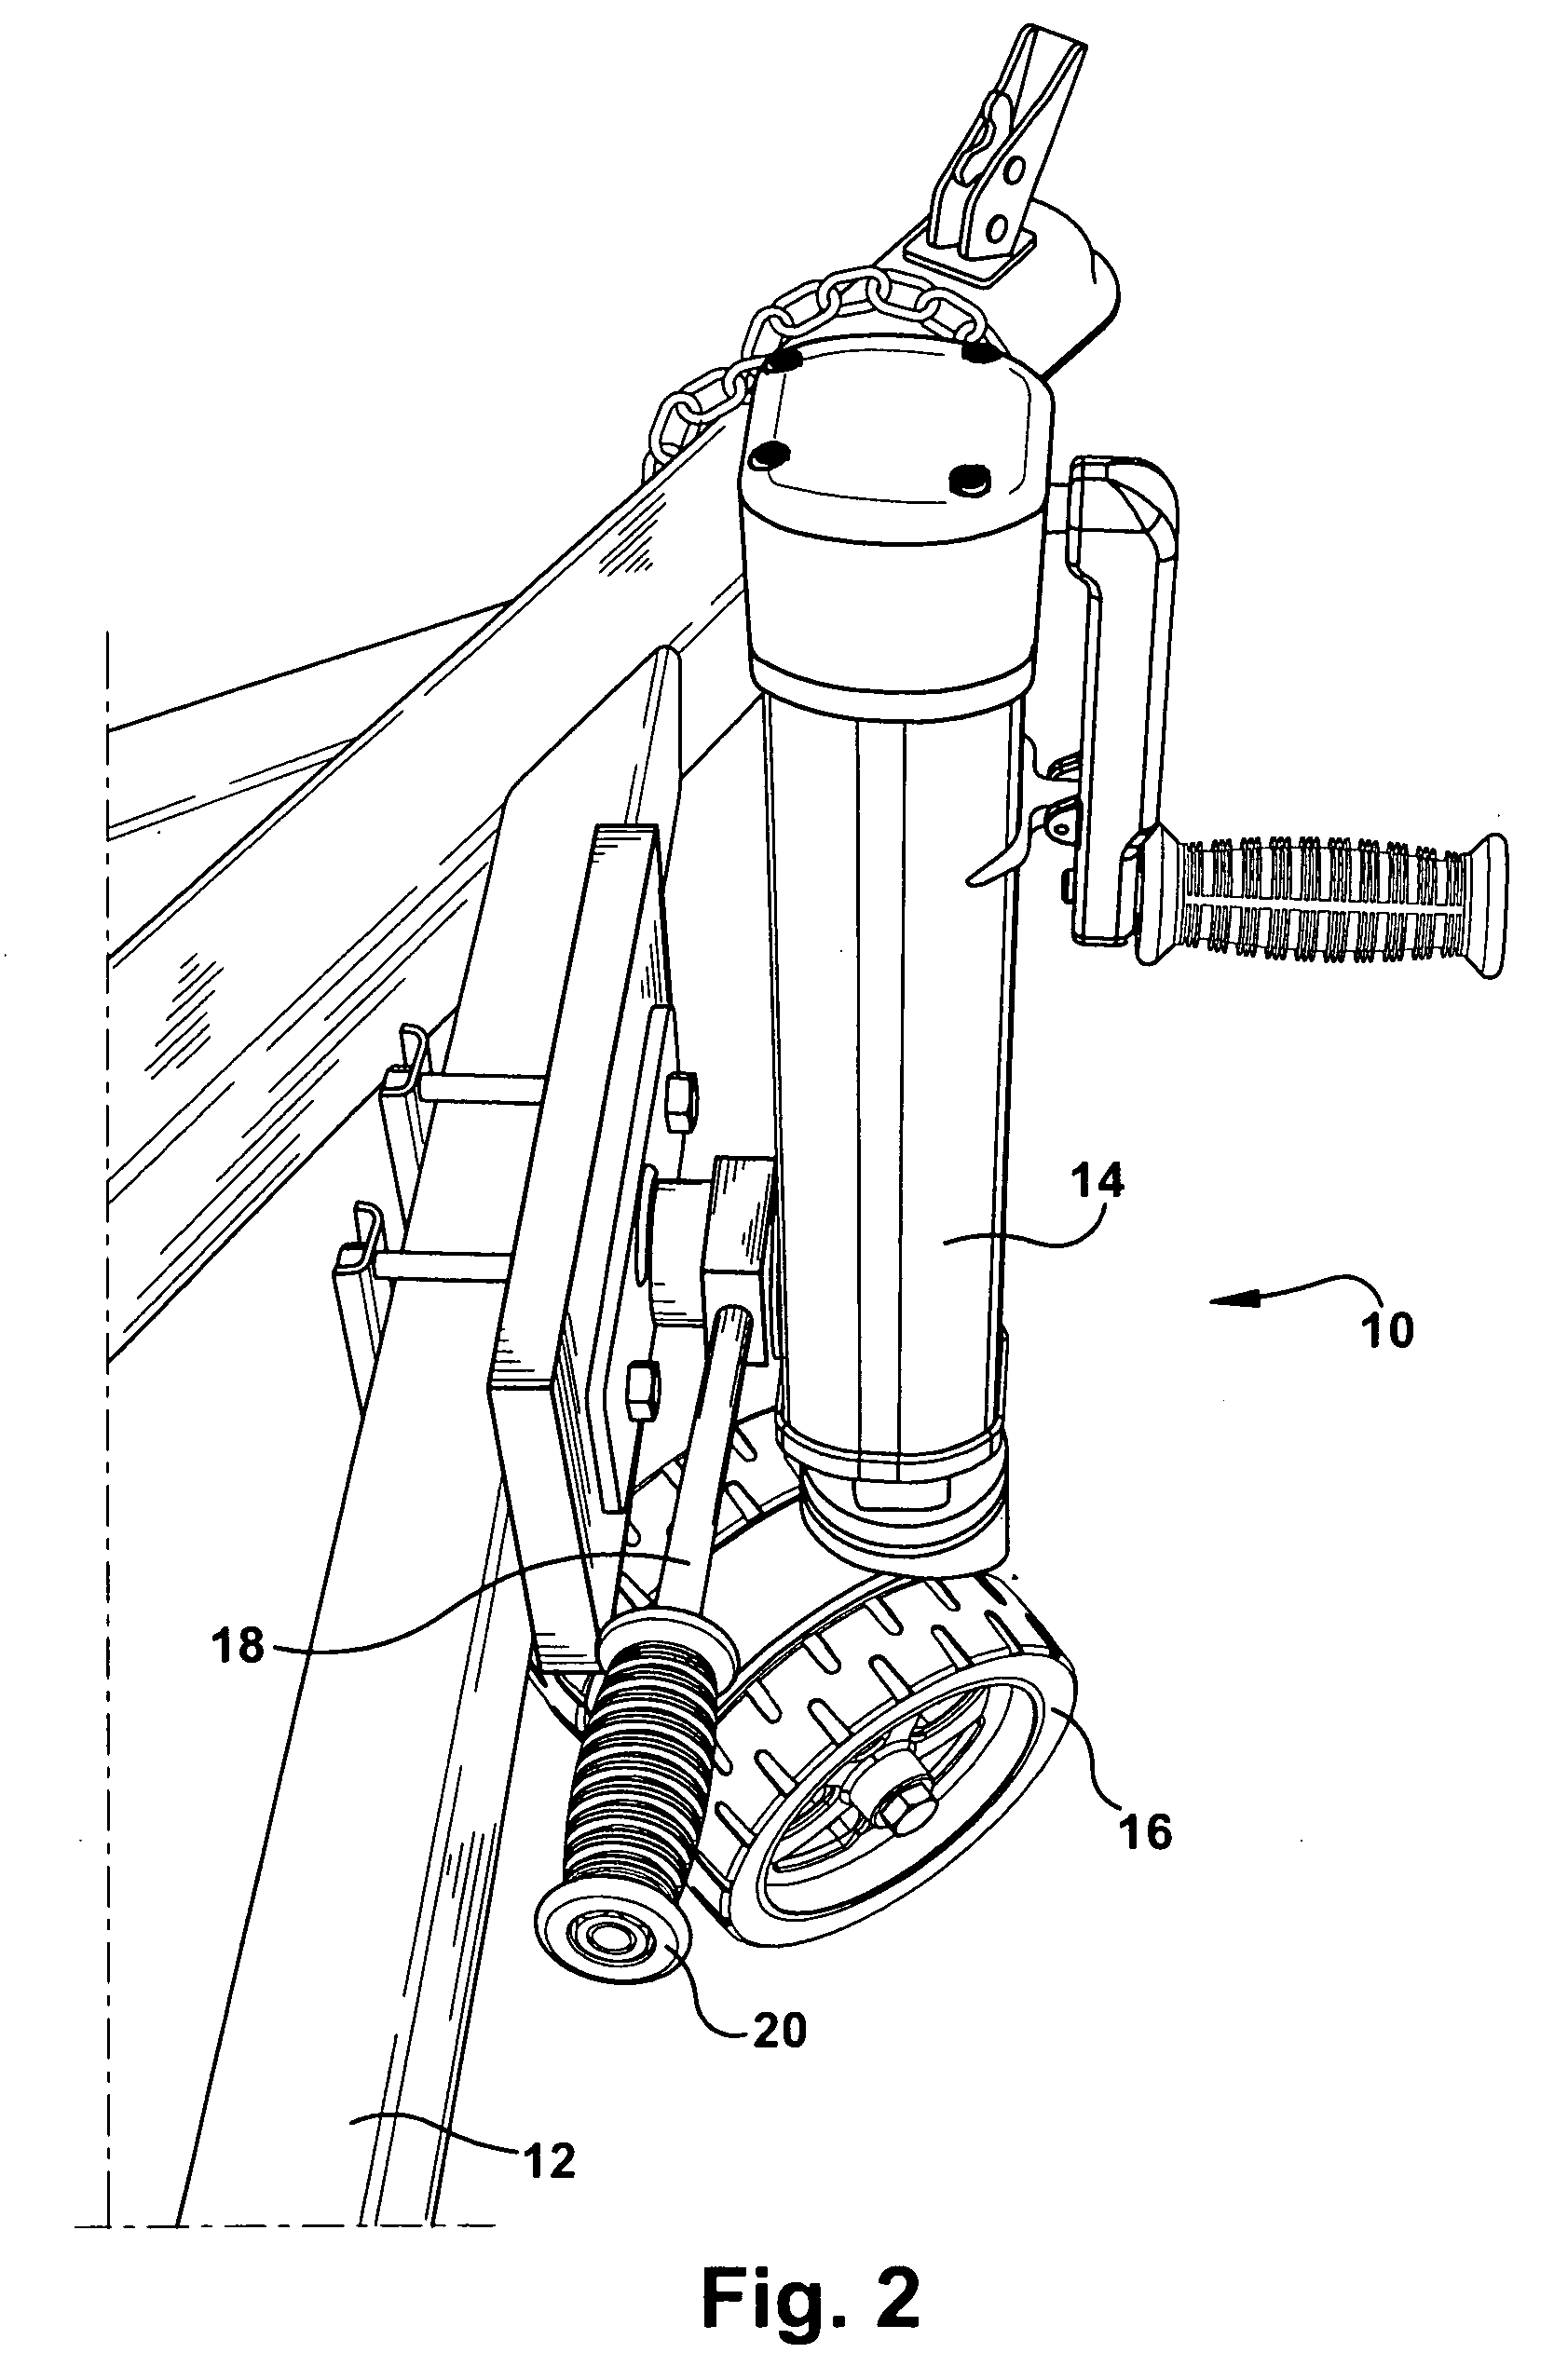 Vertically adjustable mount for jack assembly